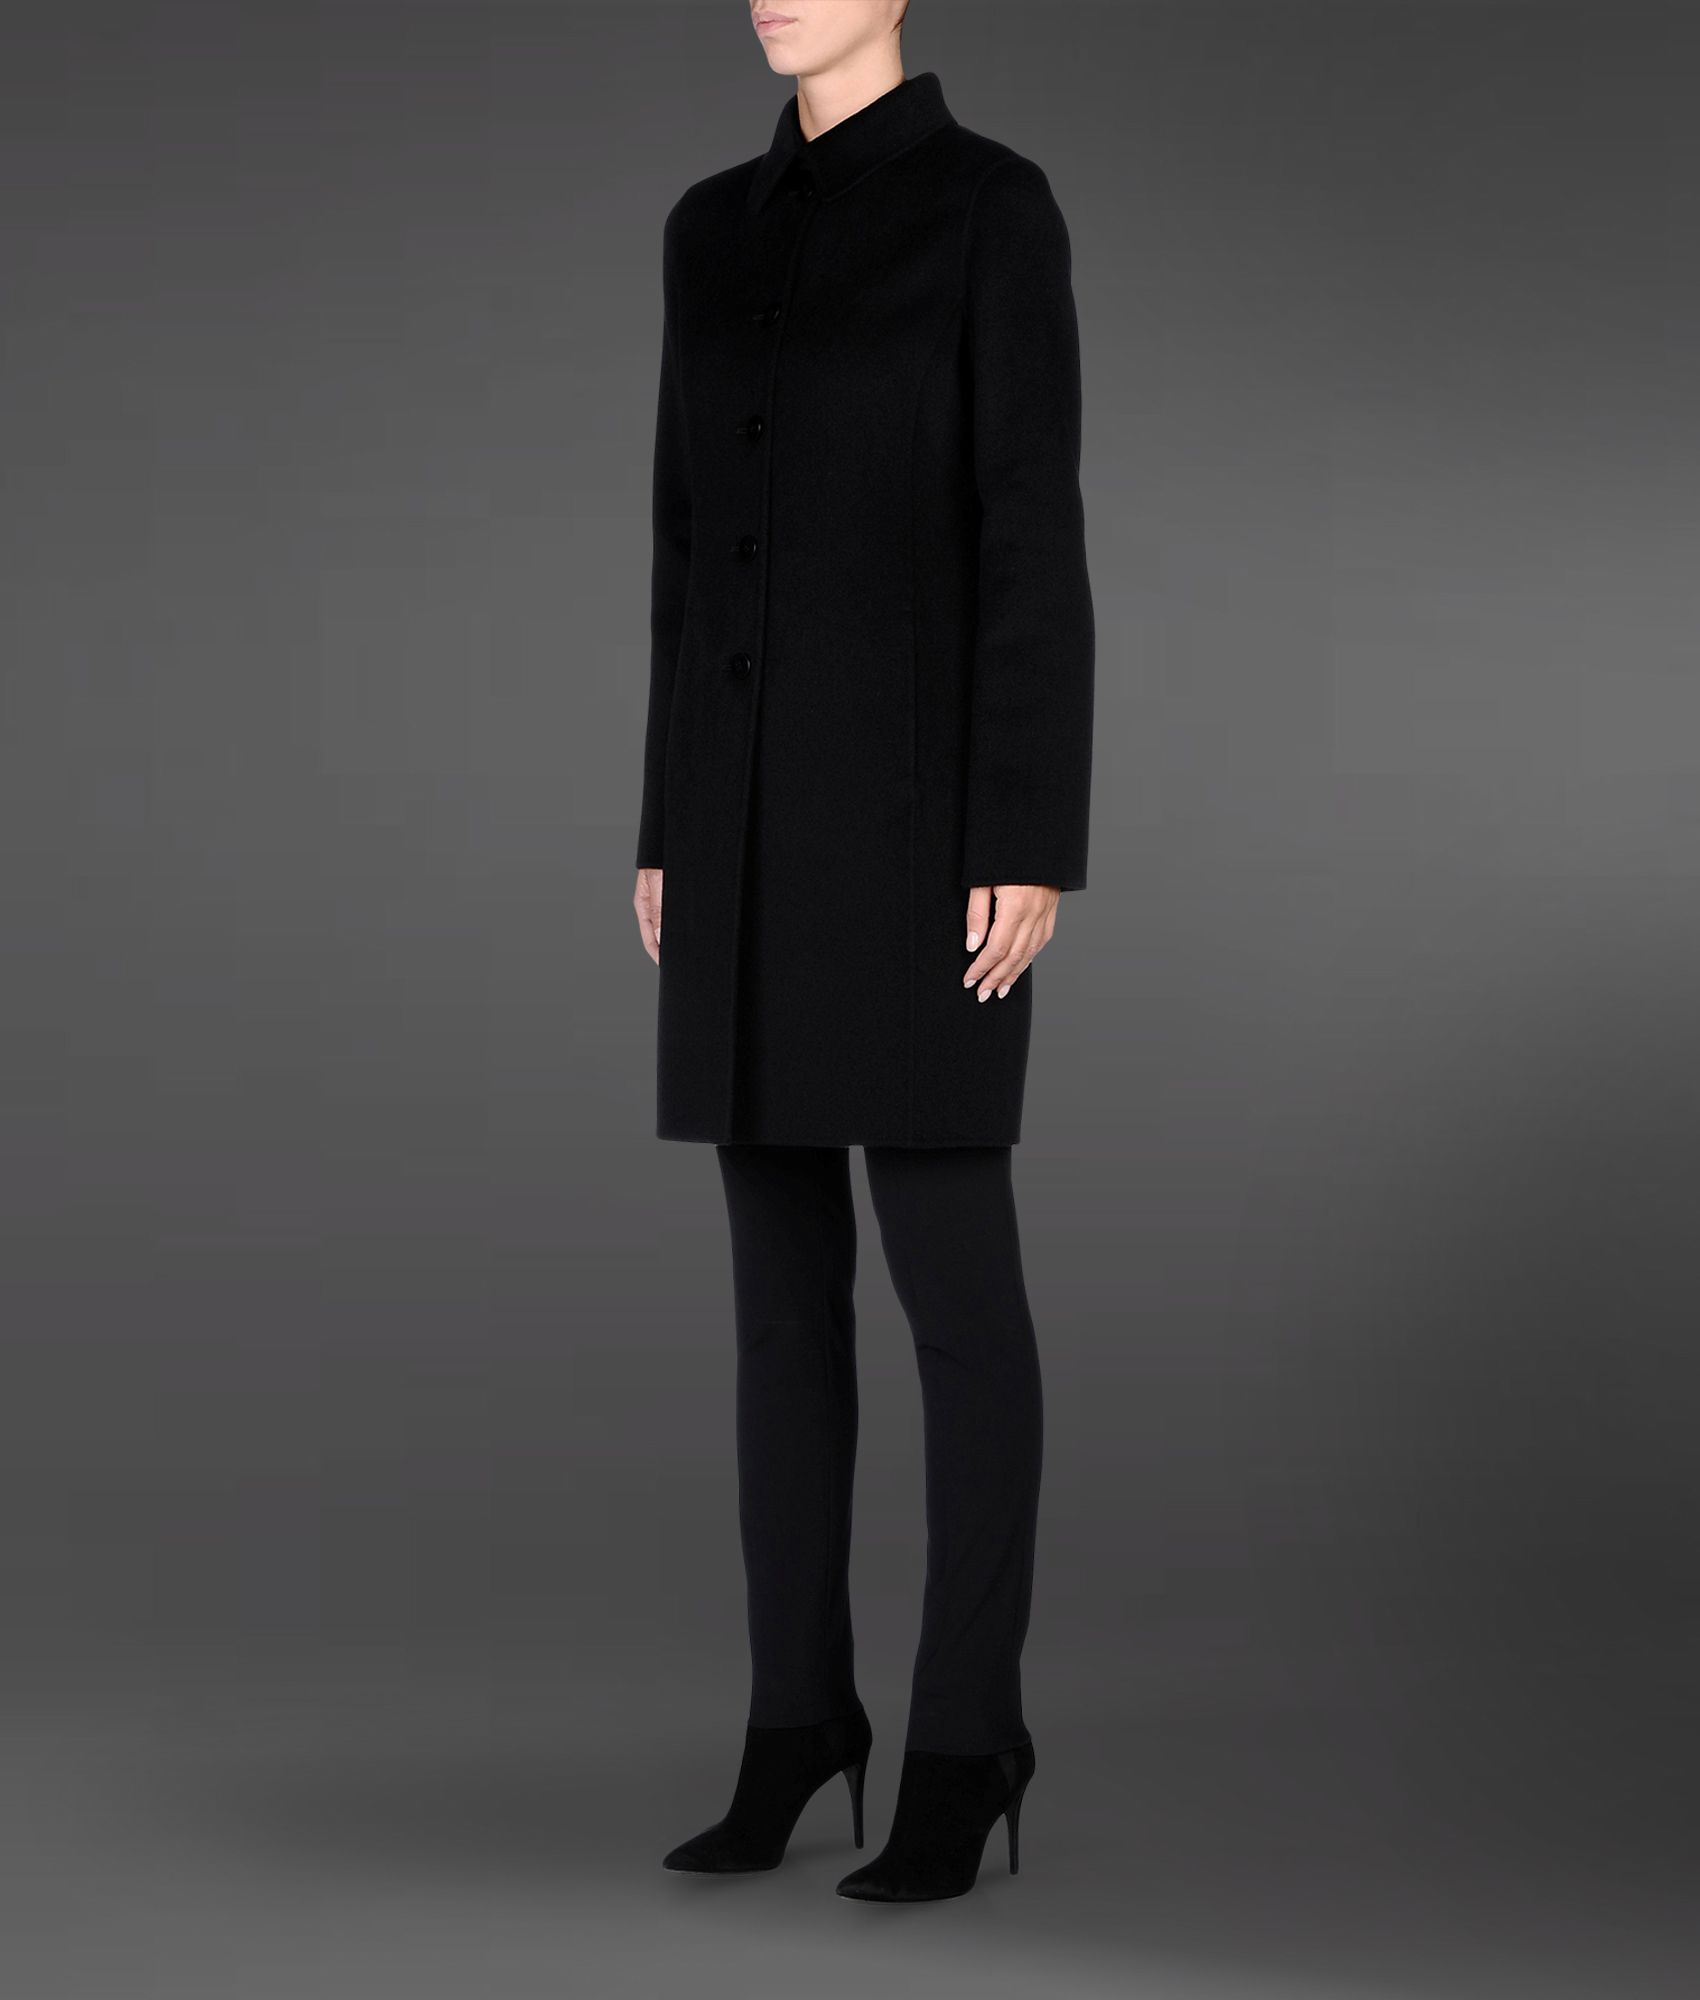 emporio armani black coat